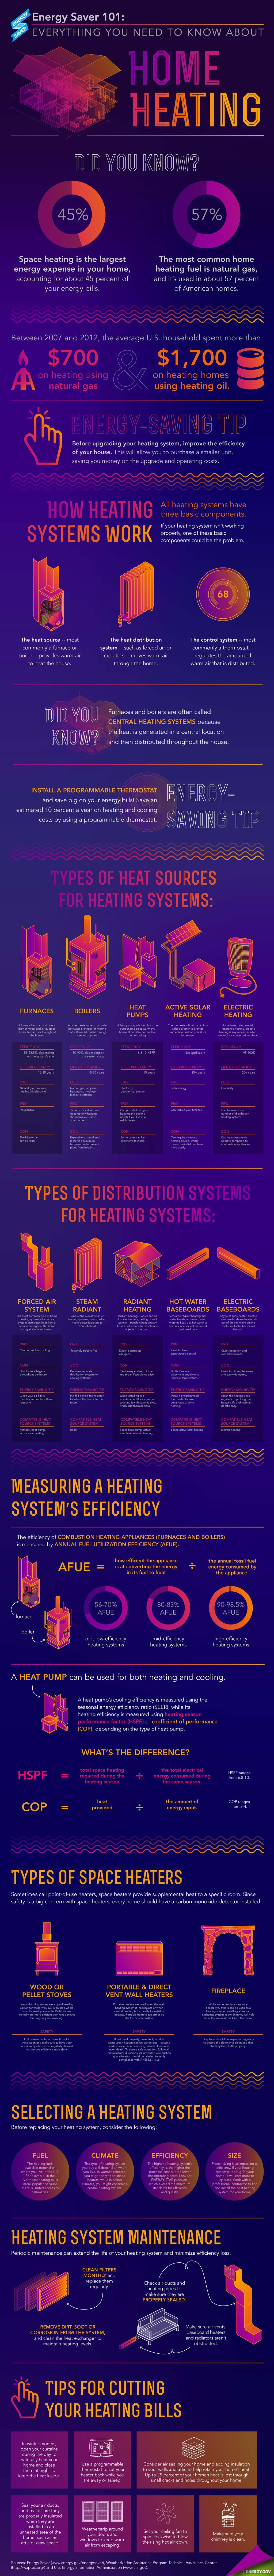 HomeHeating-Energy-Infographic.jpg